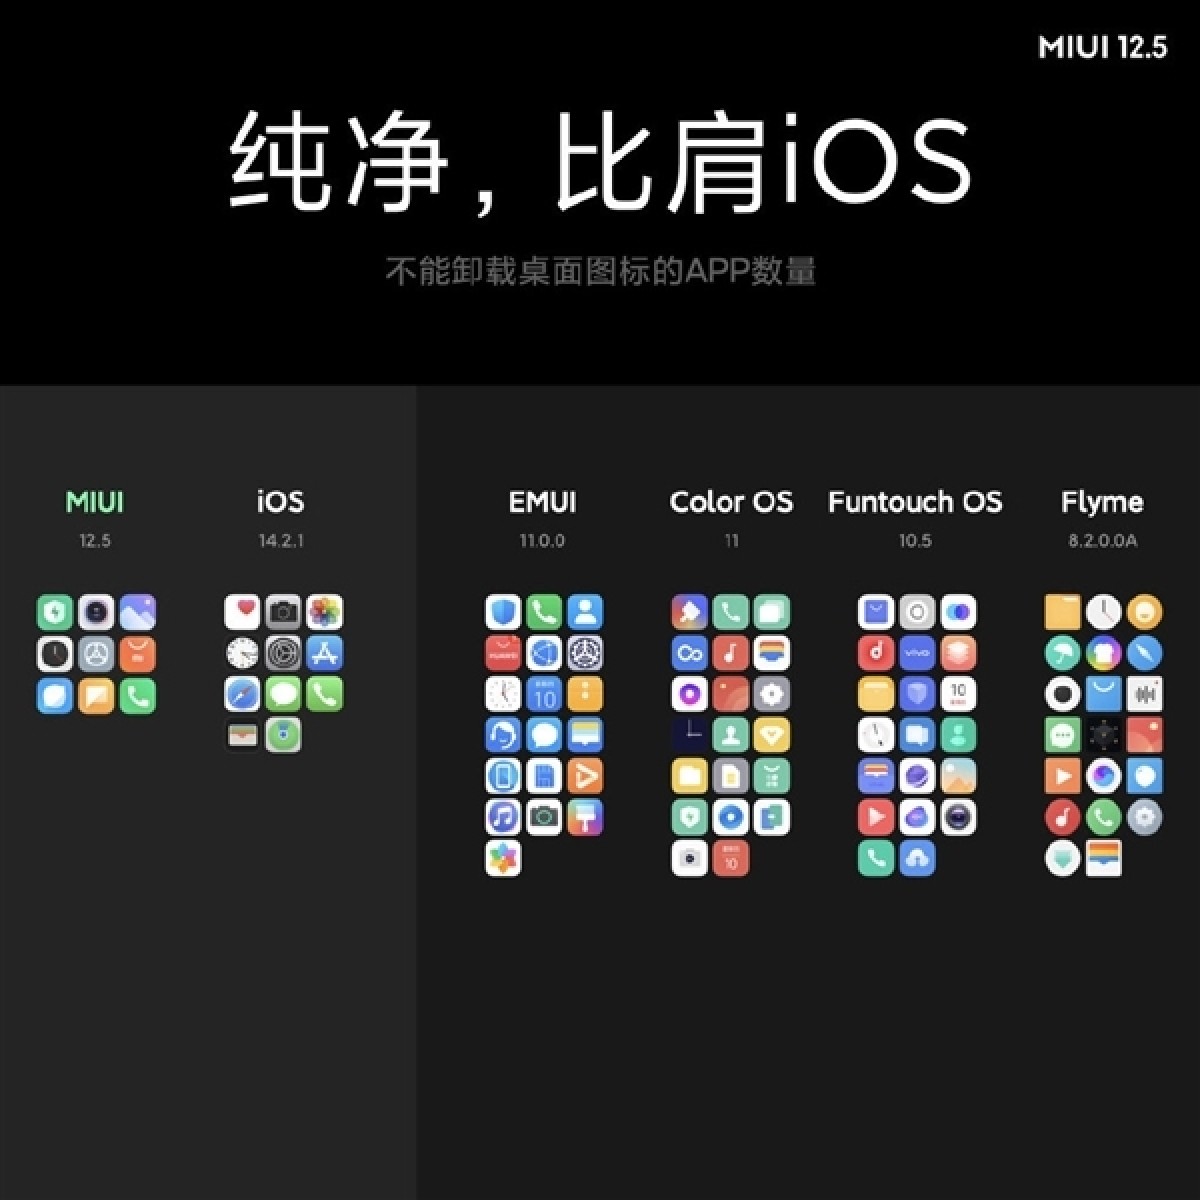 Прошивки miui 12.5. Оболочка Сяоми MIUI 12. Xiaomi MIUI 12.5. Интерфейс MIUI 12.5. Операционная система MIUI Прошивка.